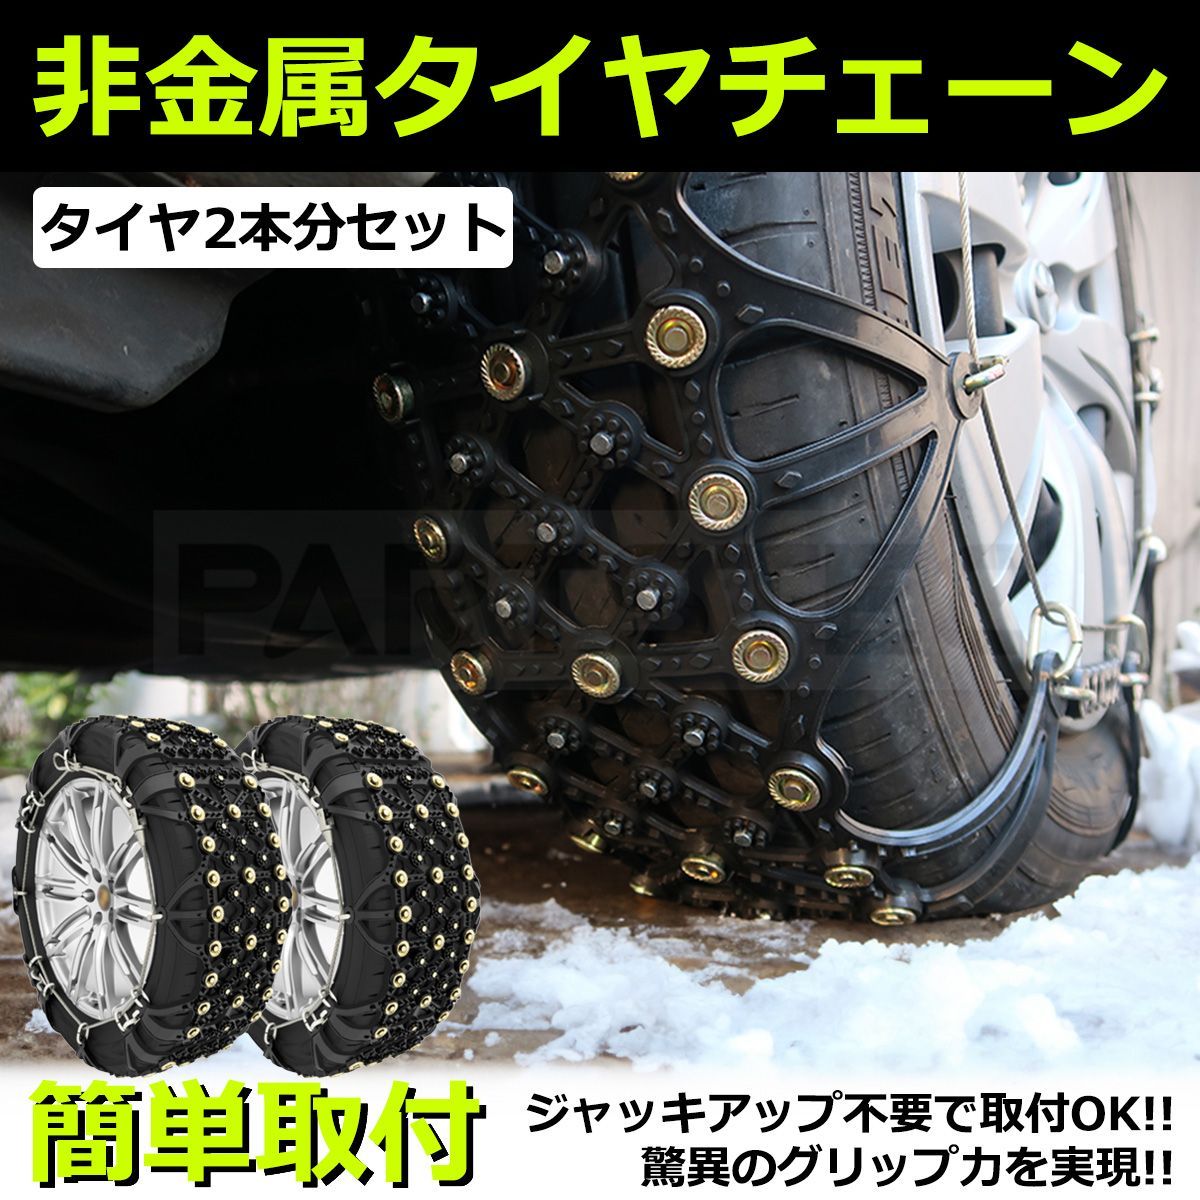 HAIKAWI 非金属 タイヤチェーン規制品車用 スノーチェーン 軽自動車 雪